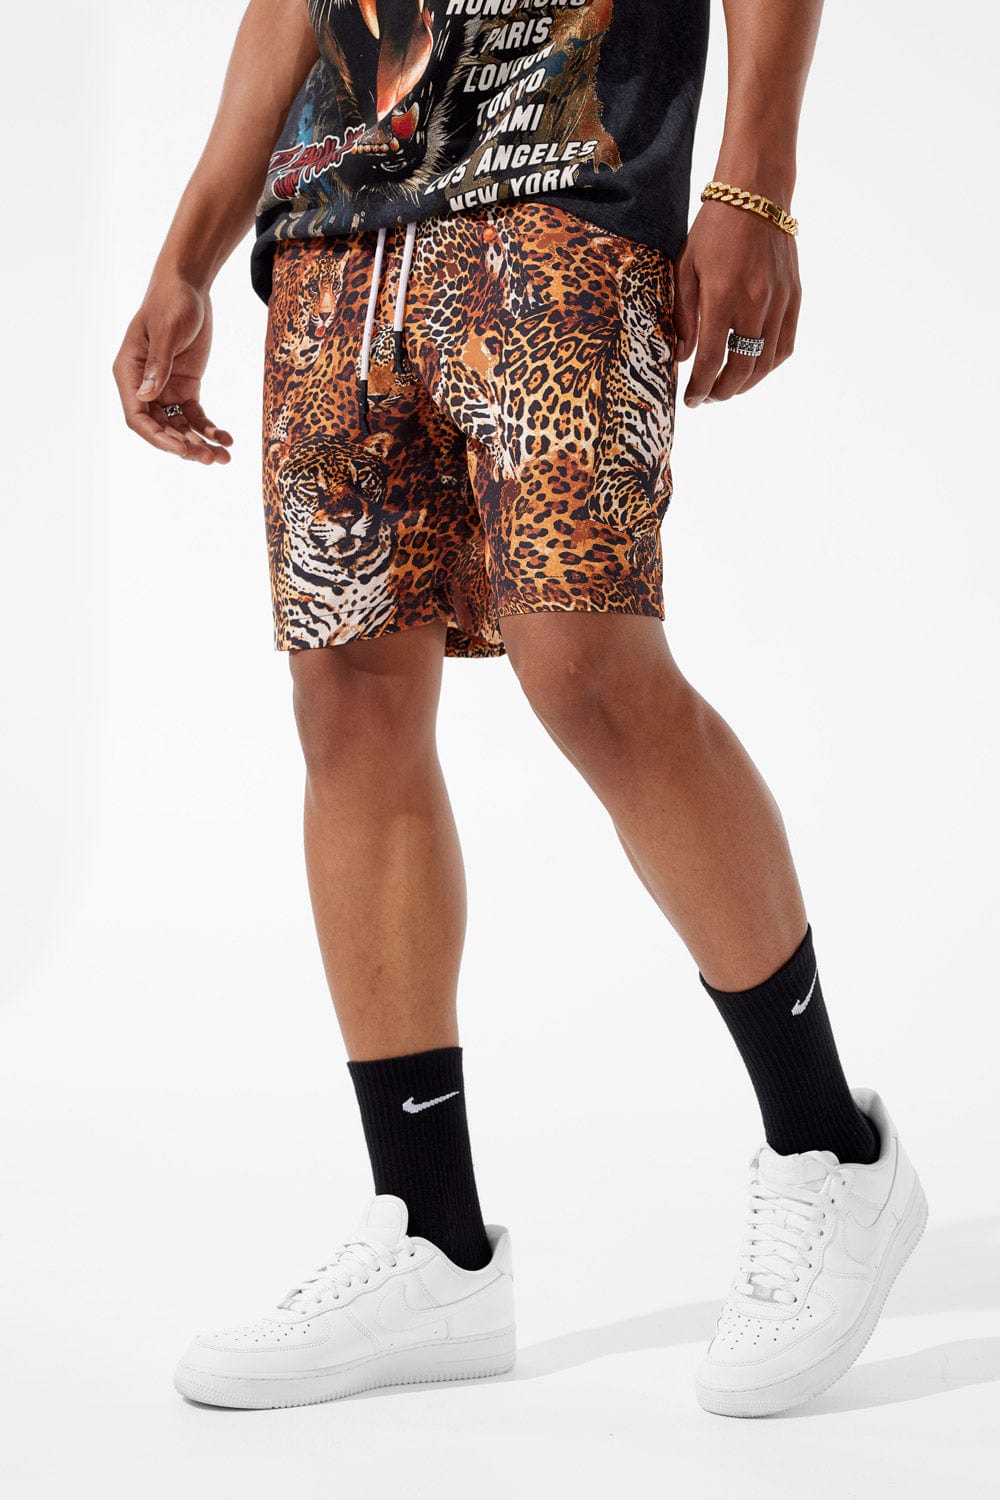 Jordan Craig Retro - Apex Predator Shorts (Pantera)